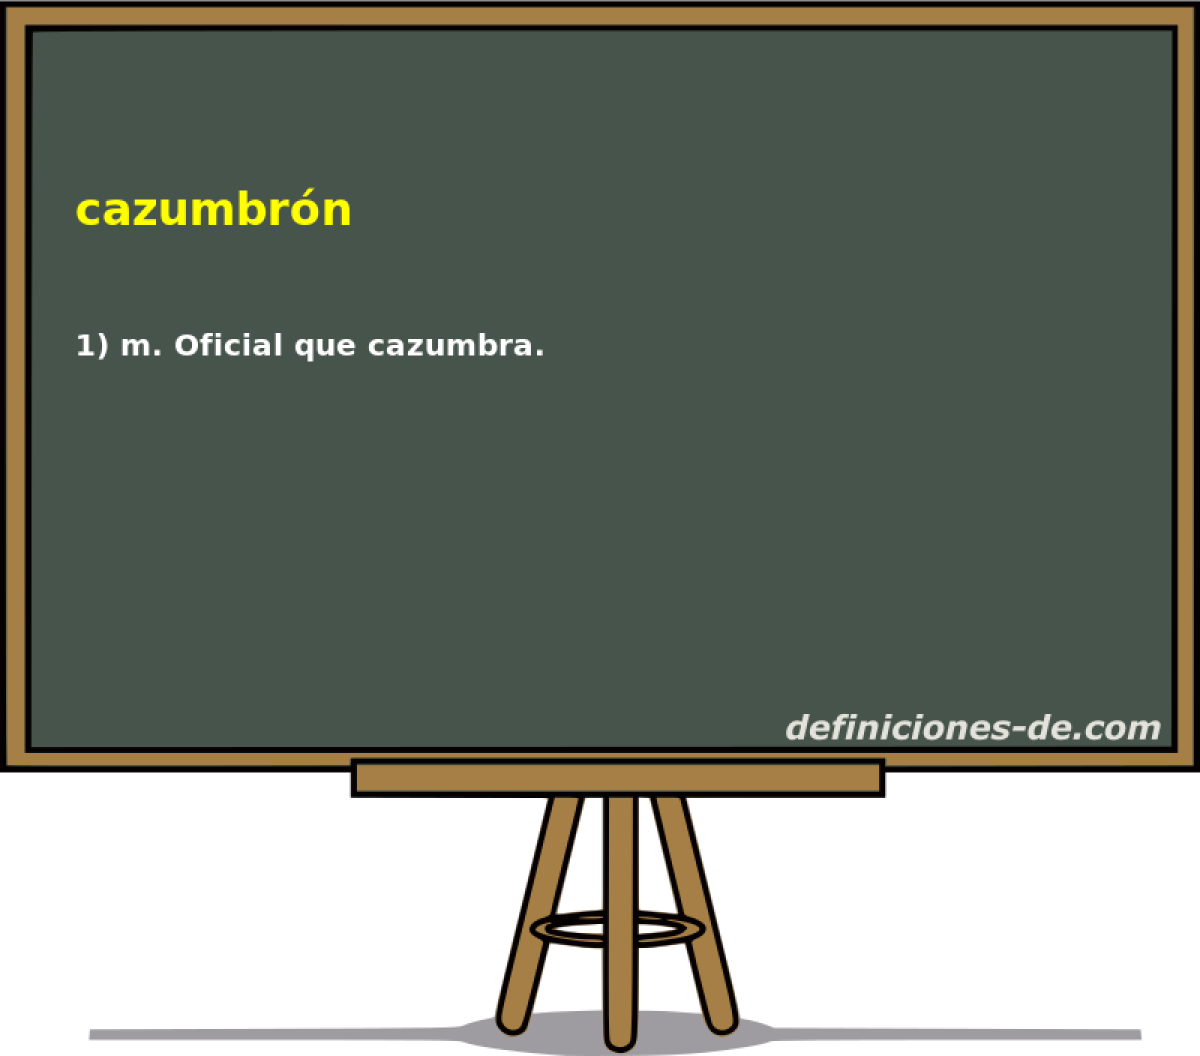 cazumbrn 